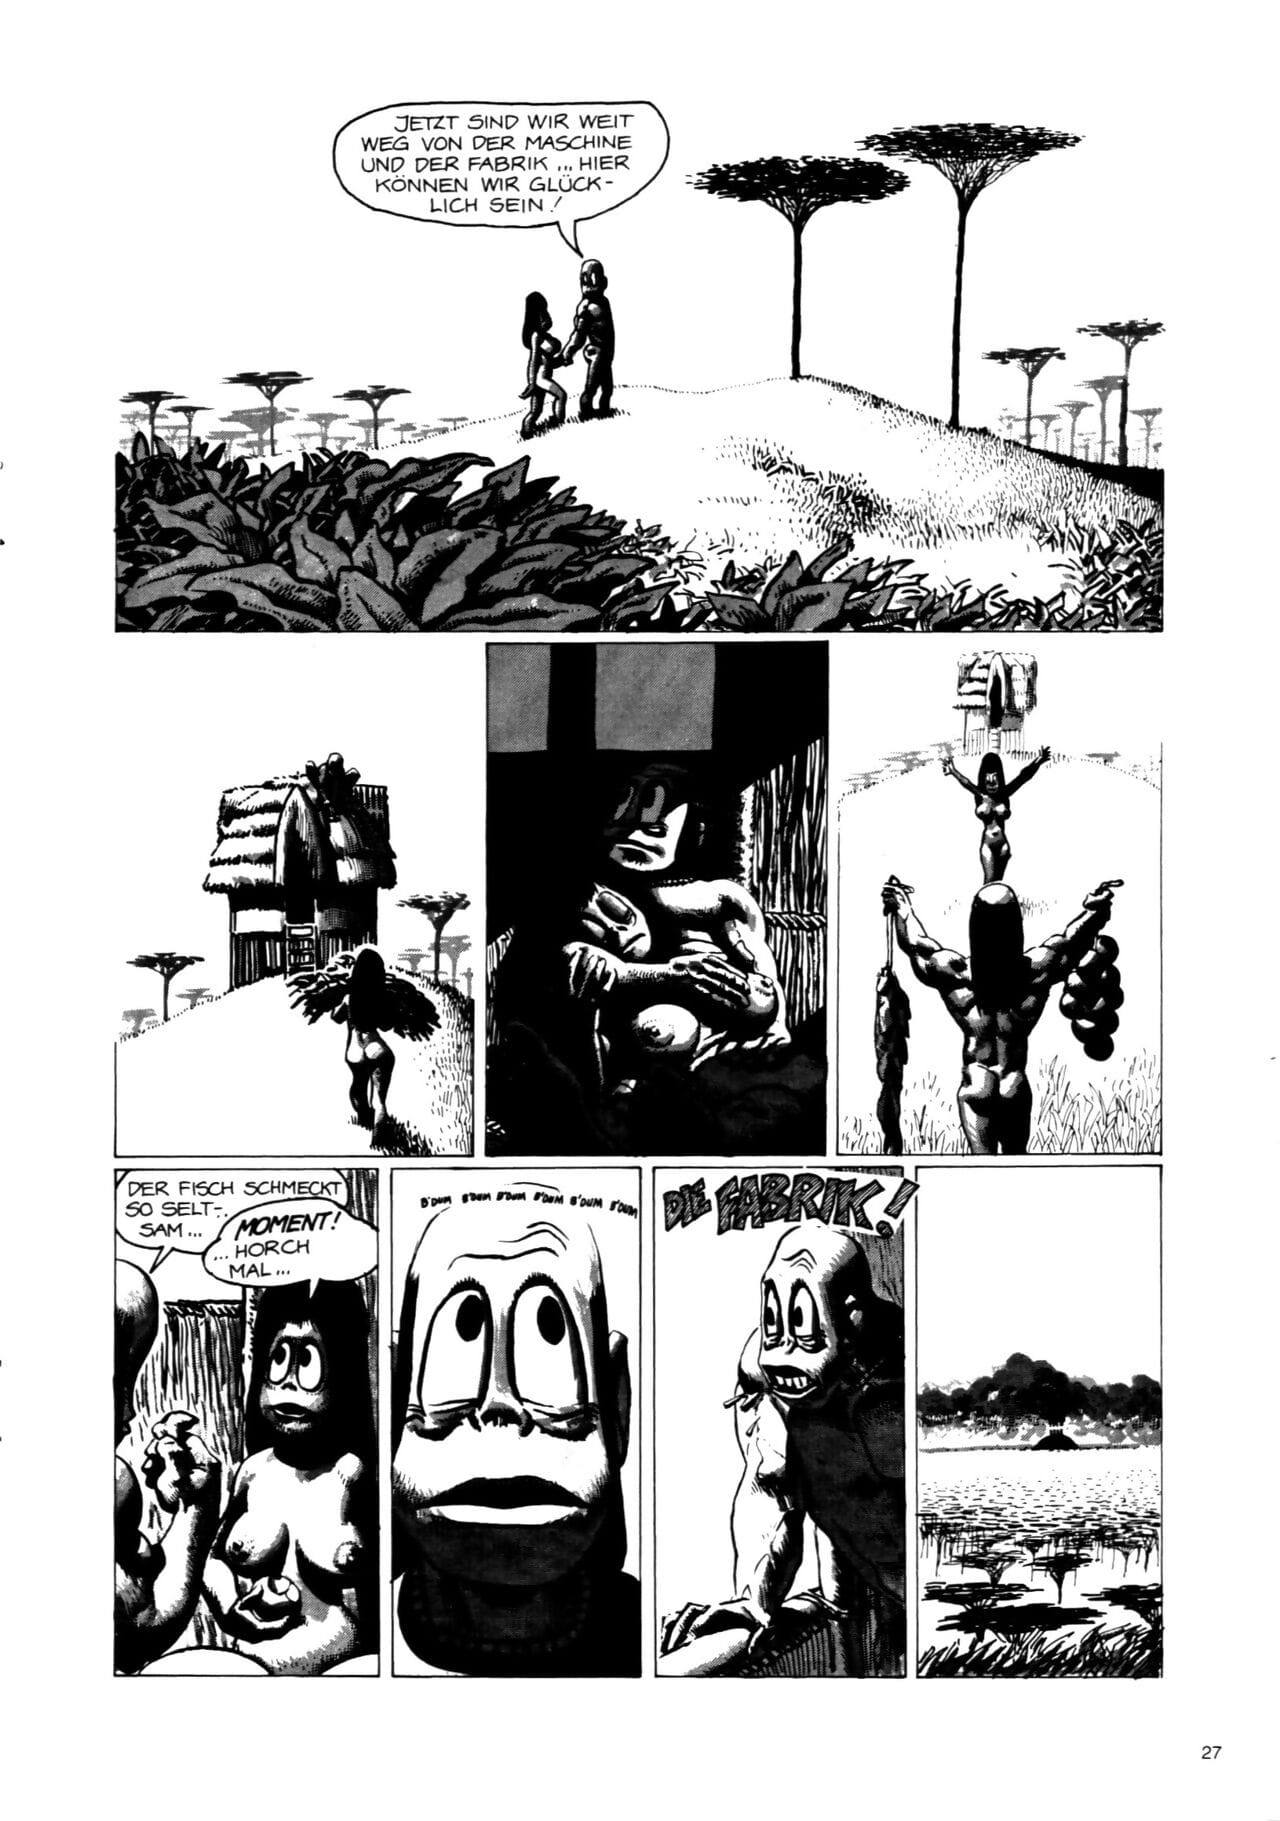 schwermetall #054 часть 2 page 1